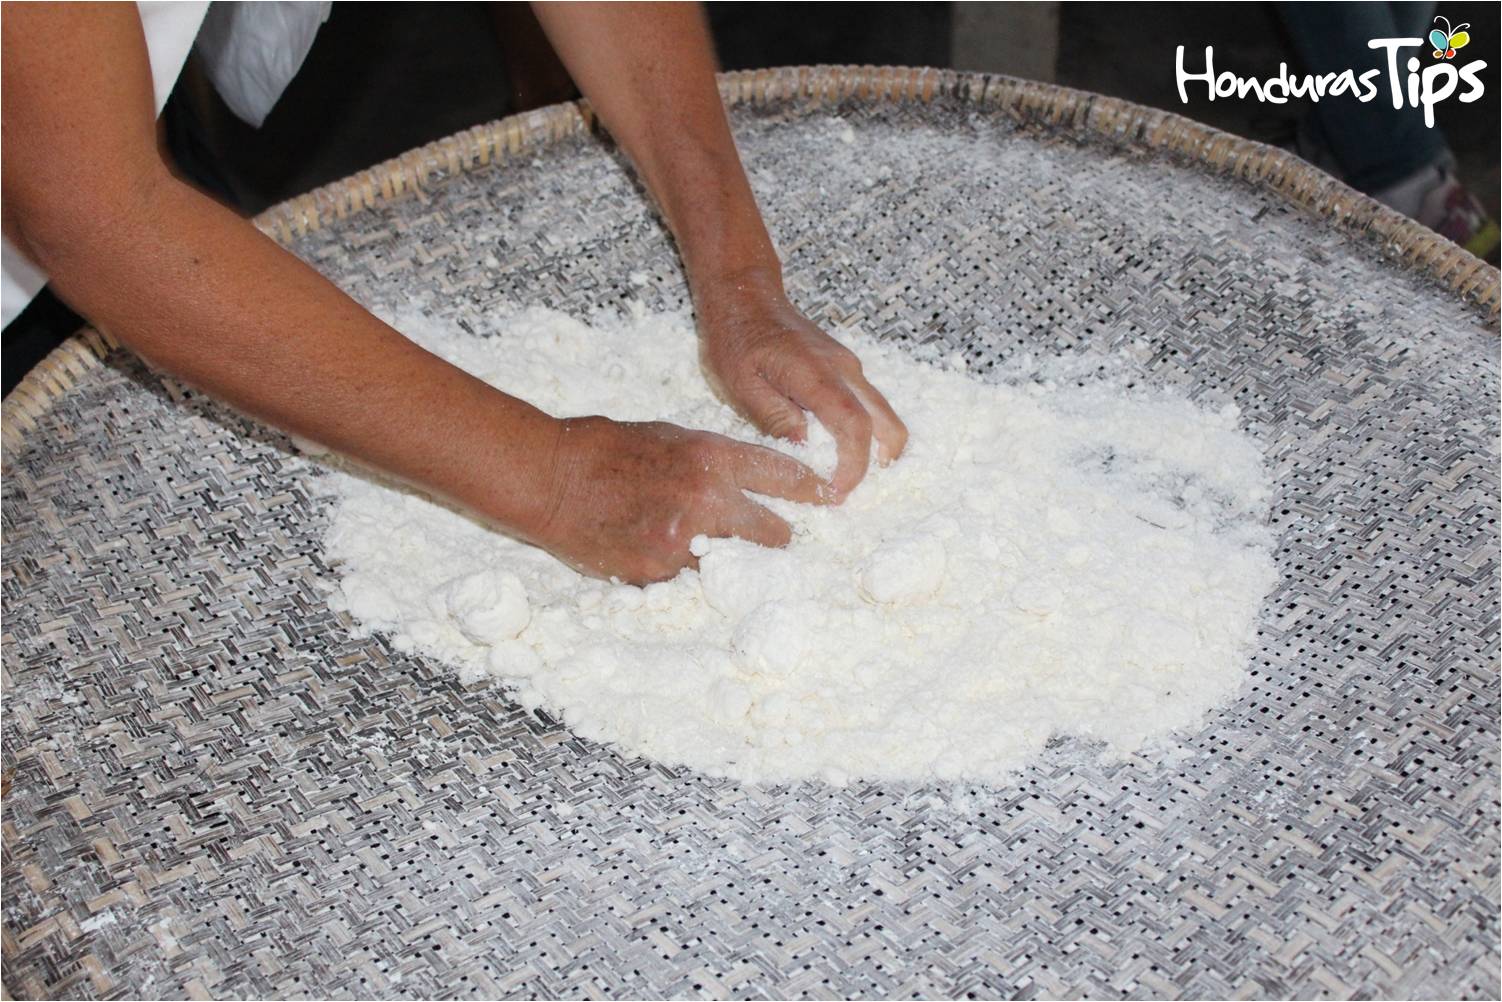 En el tour de casabe podrá apreciar el proceso de la yuca para convertirla en casabe / During the cassava tour you can appreciate the entire process of making cassava